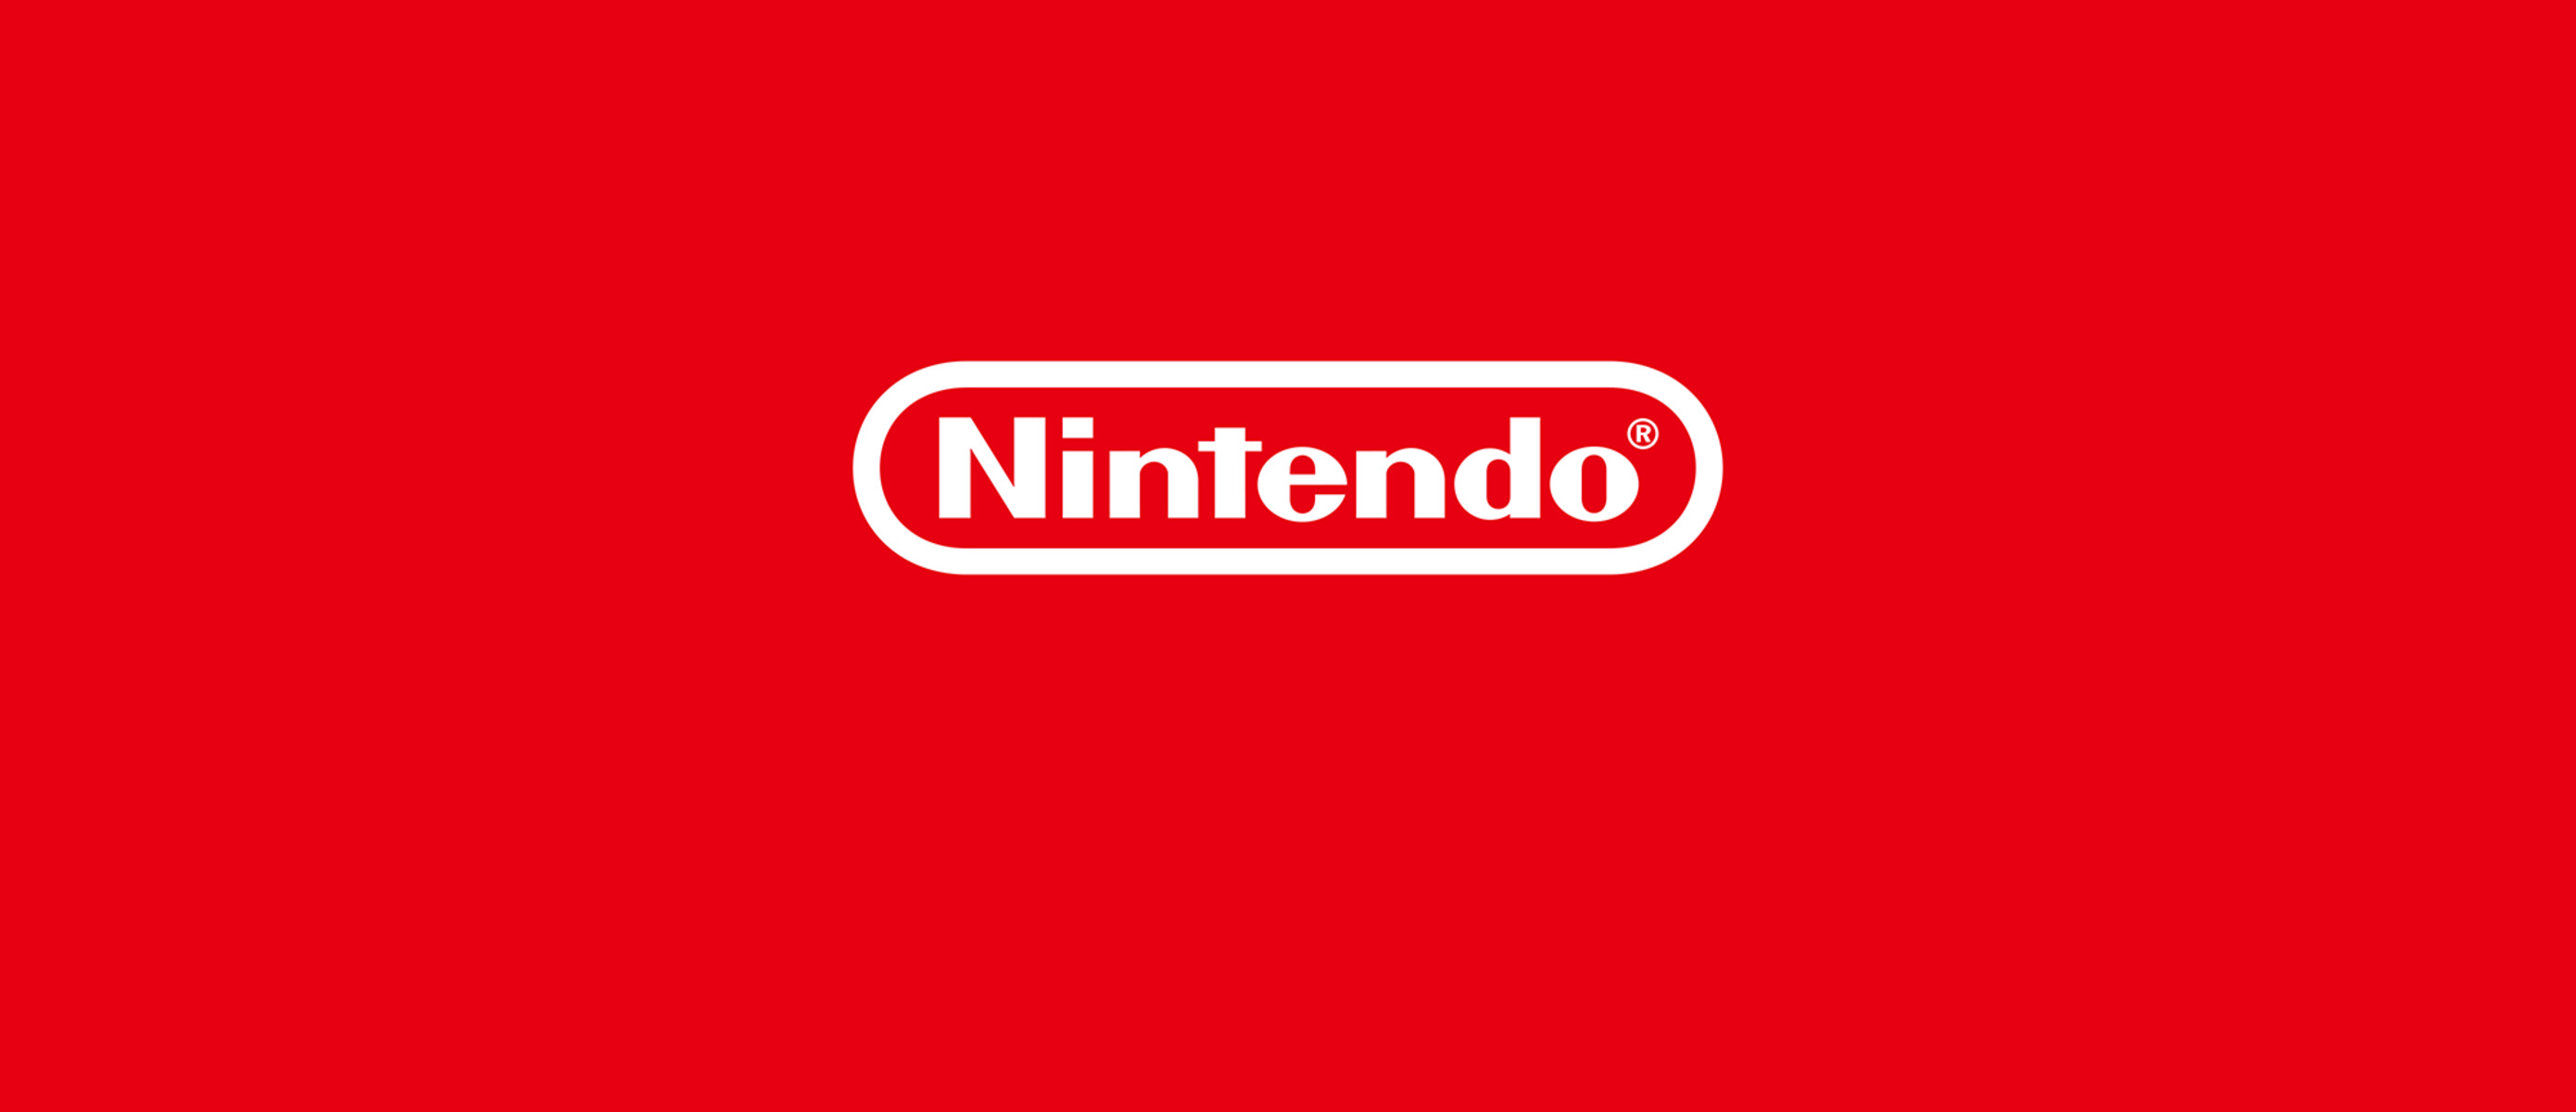 Nintendo тексты. Нинтендо. Бренд Nintendo. Nintendo лого. Аккаунт Нинтендо.